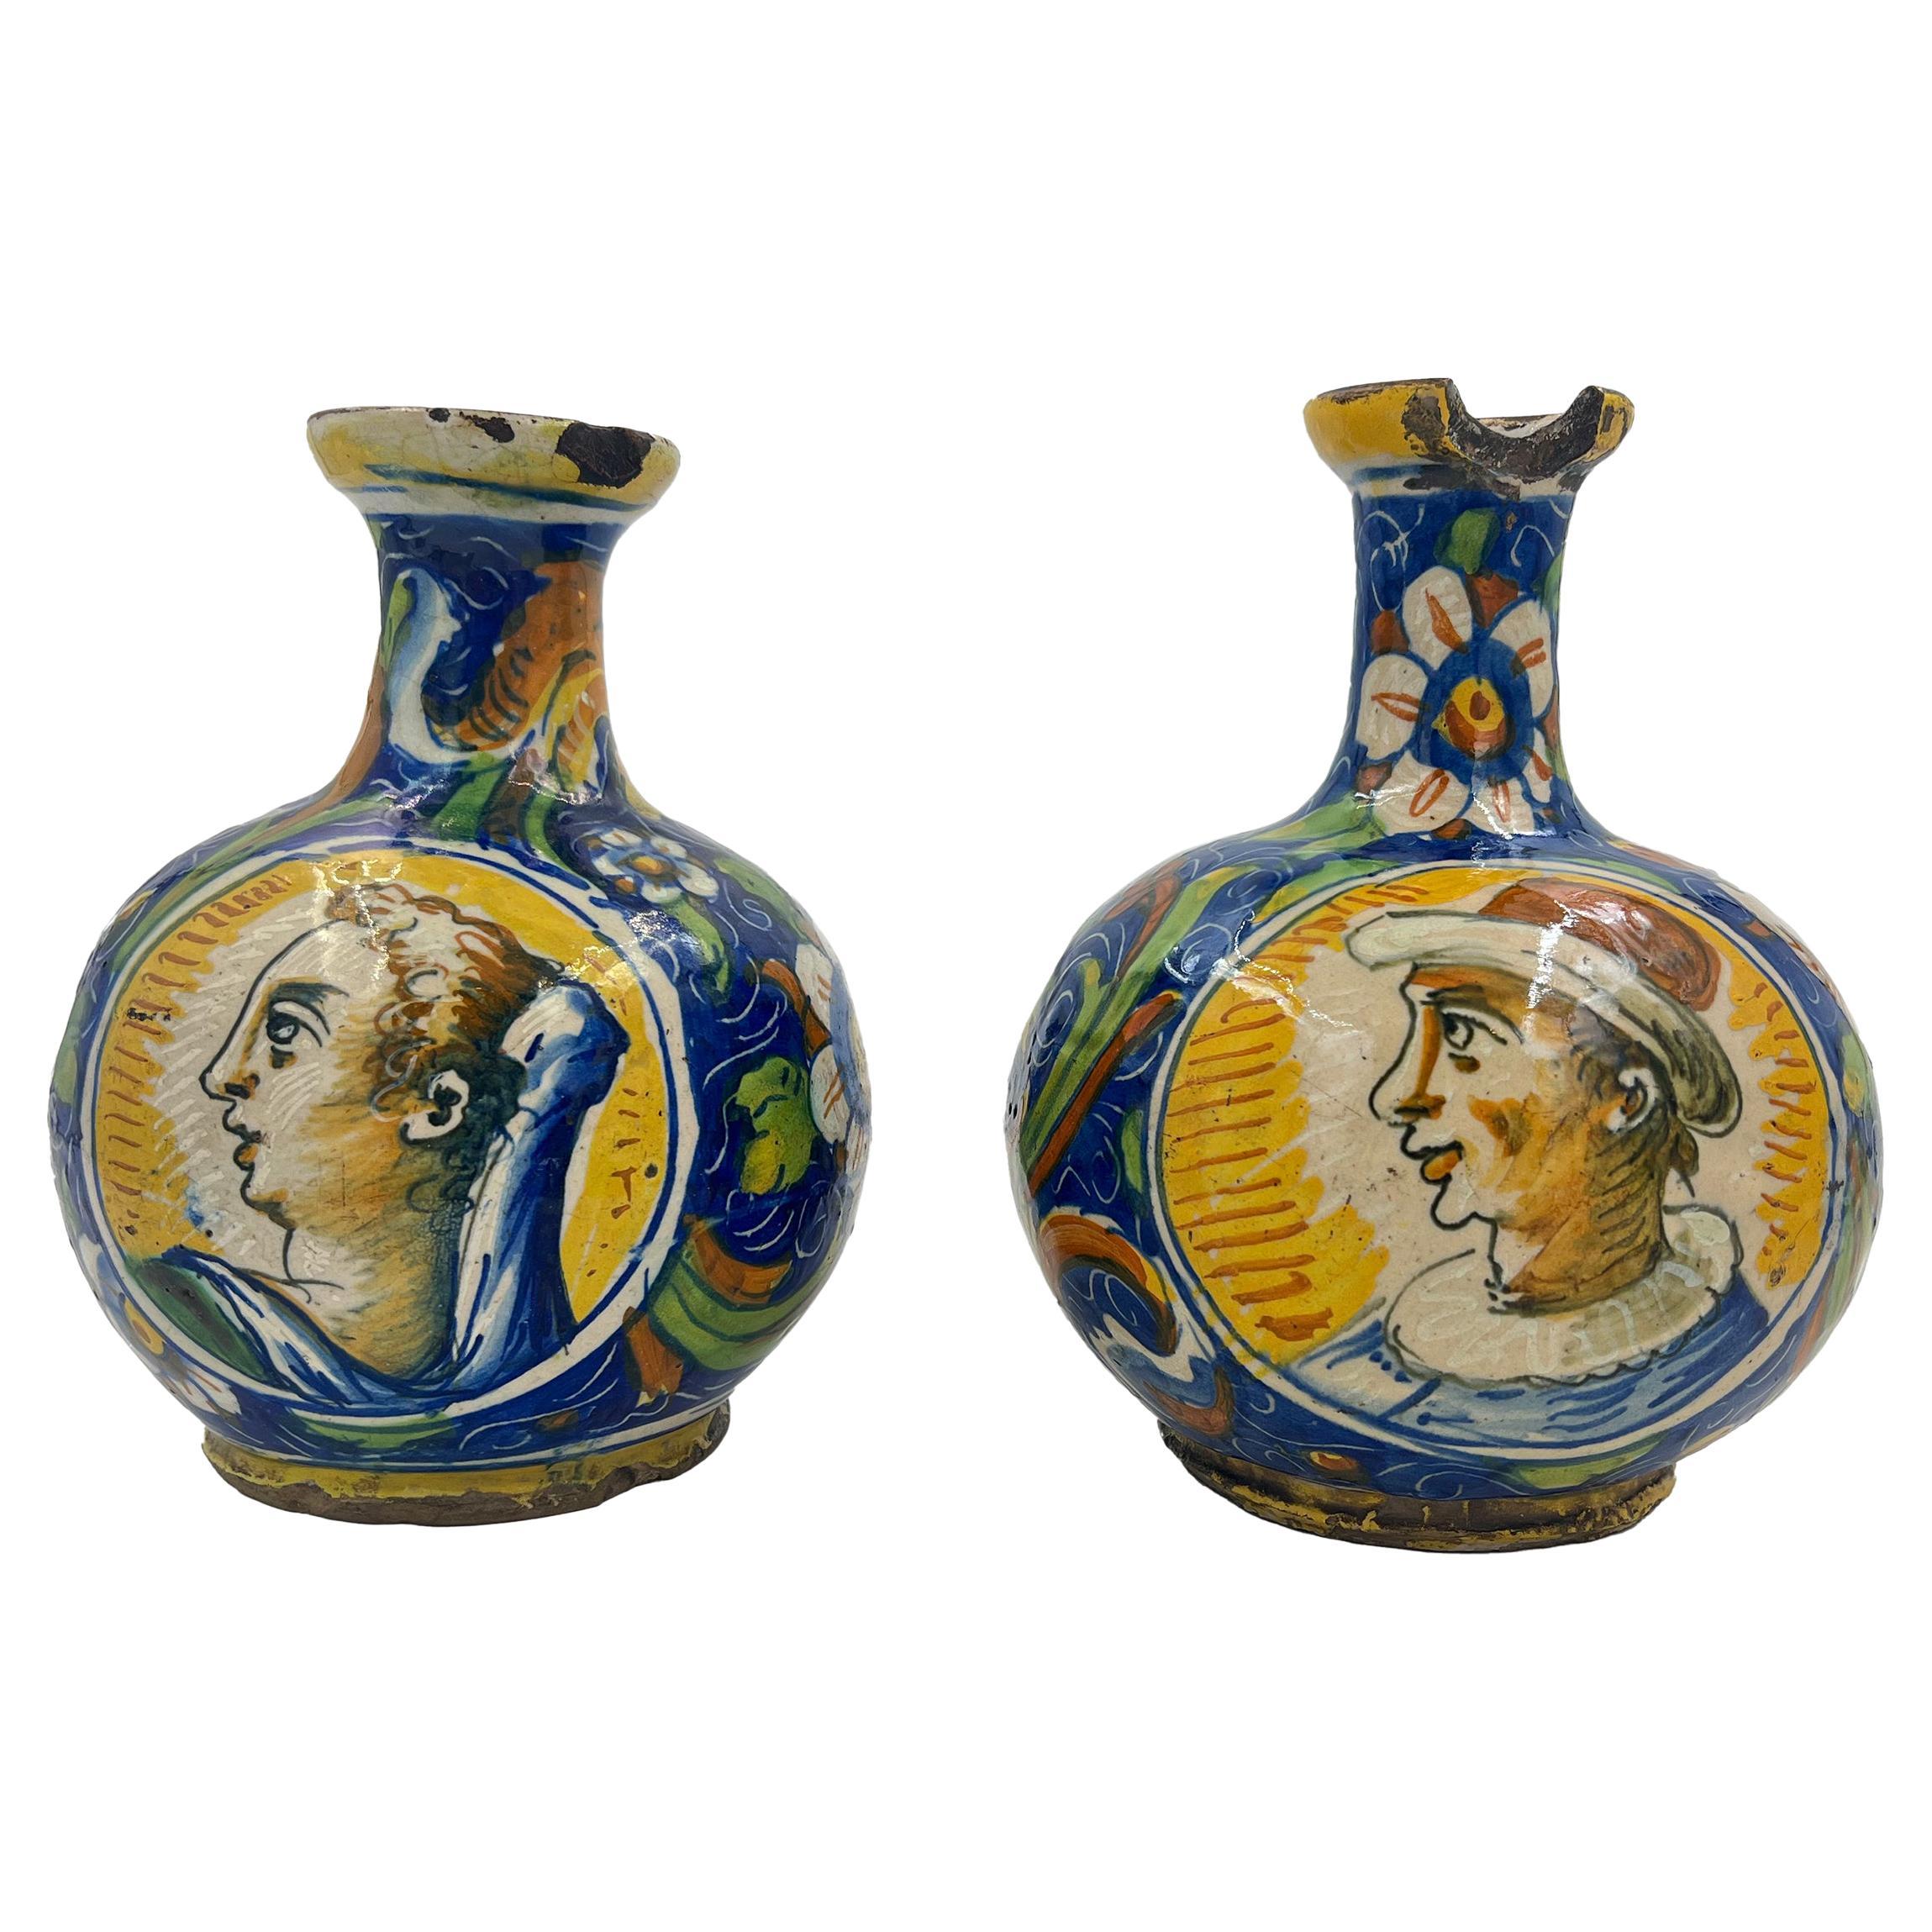 Pair of Maiolica Polychrome Vases, Italy, 18th Century